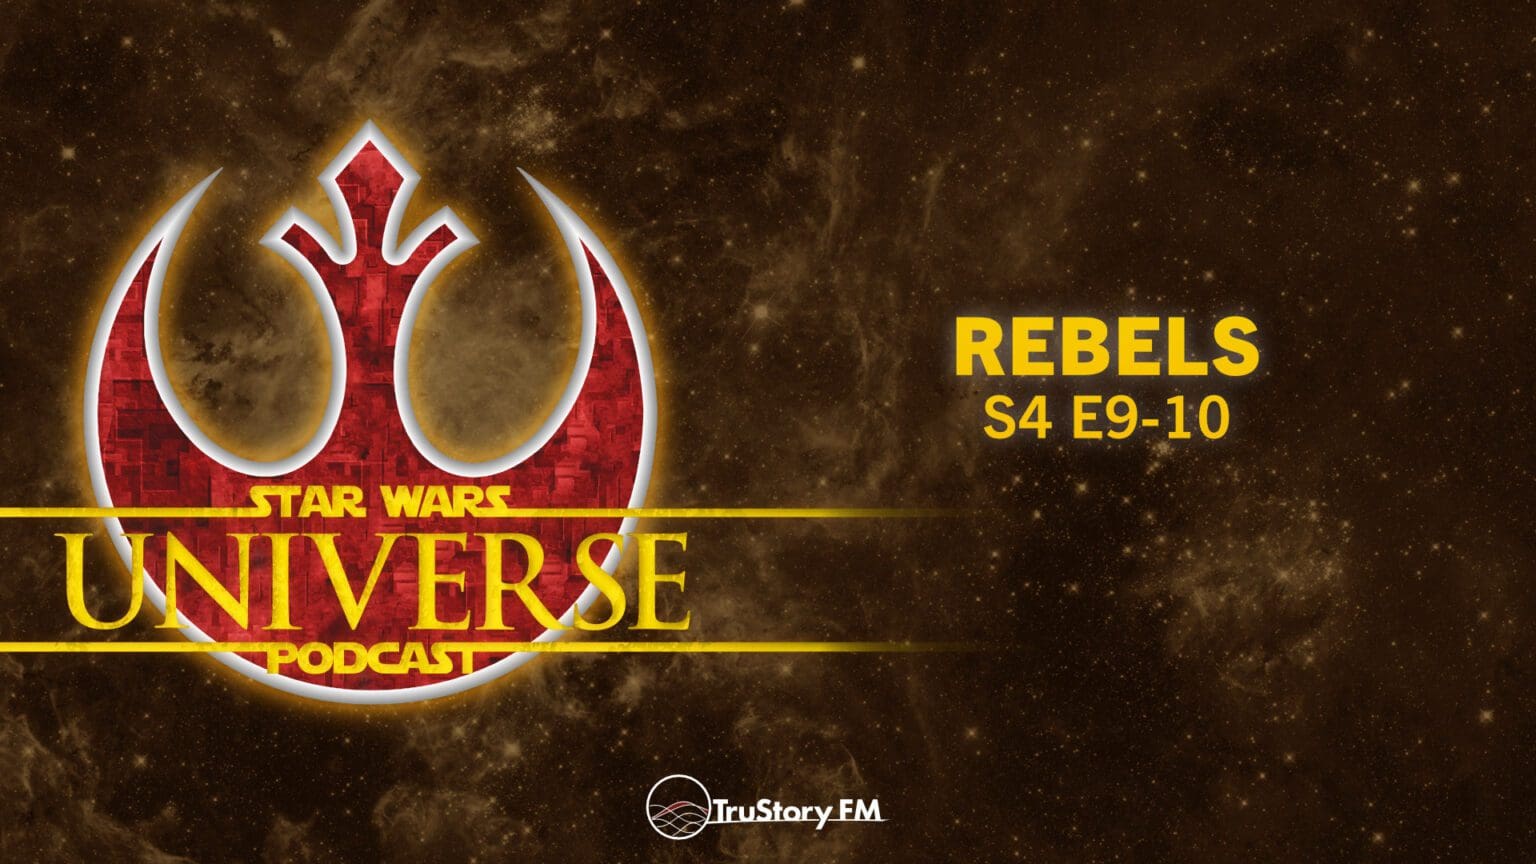 Star Wars Universe Podcast episode 217